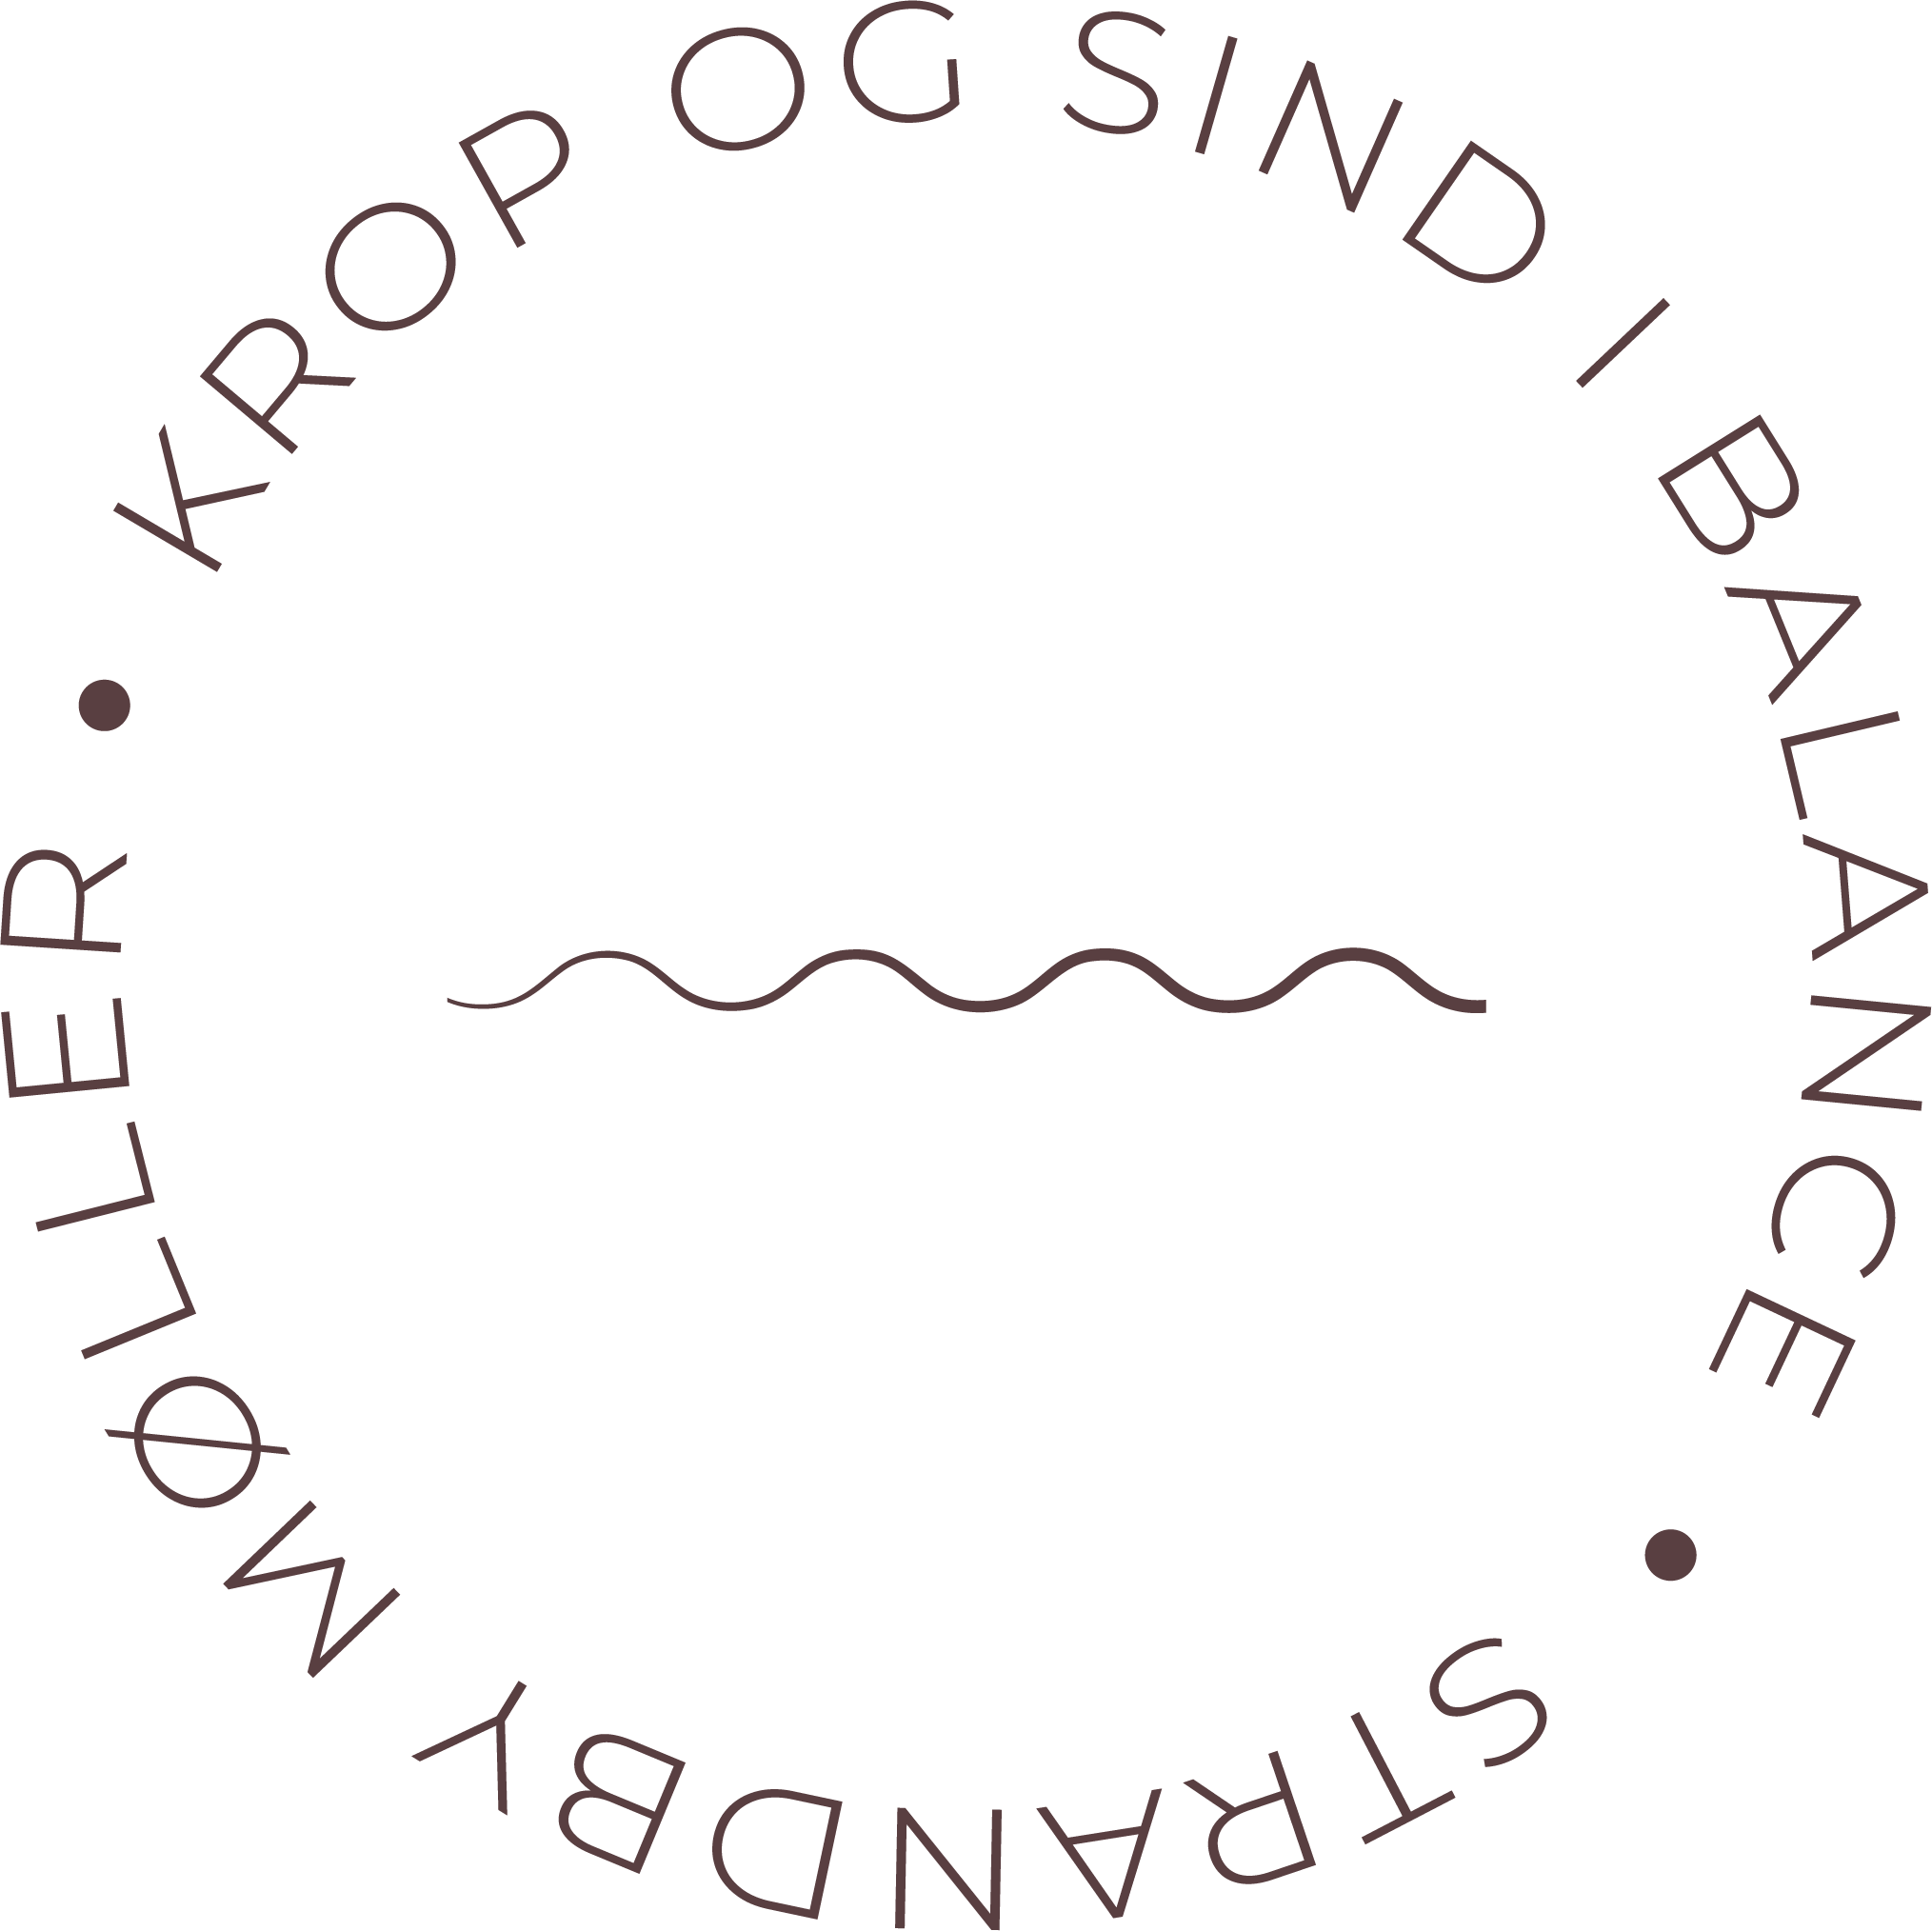 kropogsindibalance-logo